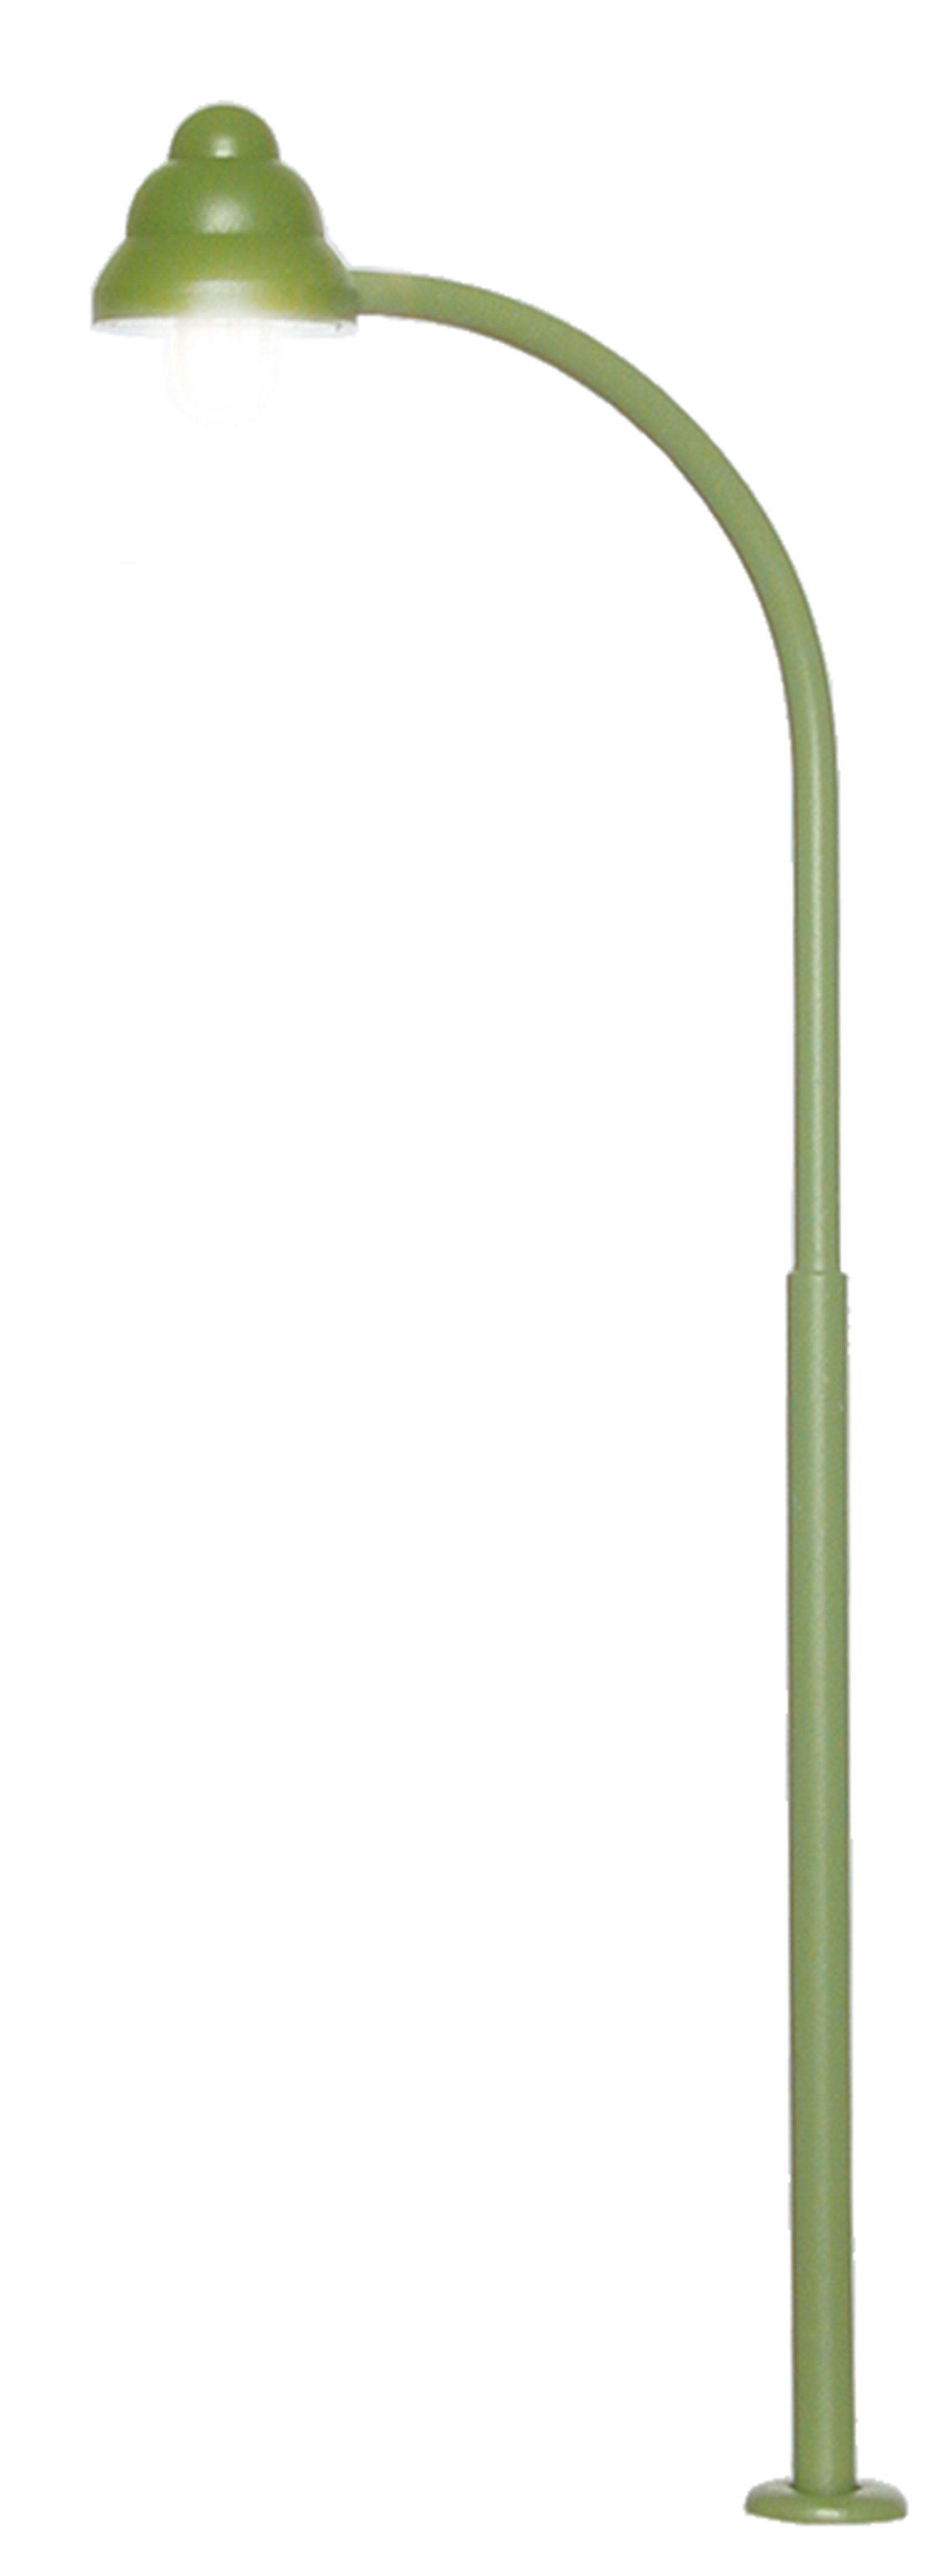 Viessmann 6012 H0 Bogen-Gaslaterne grün, LED warmweiß 